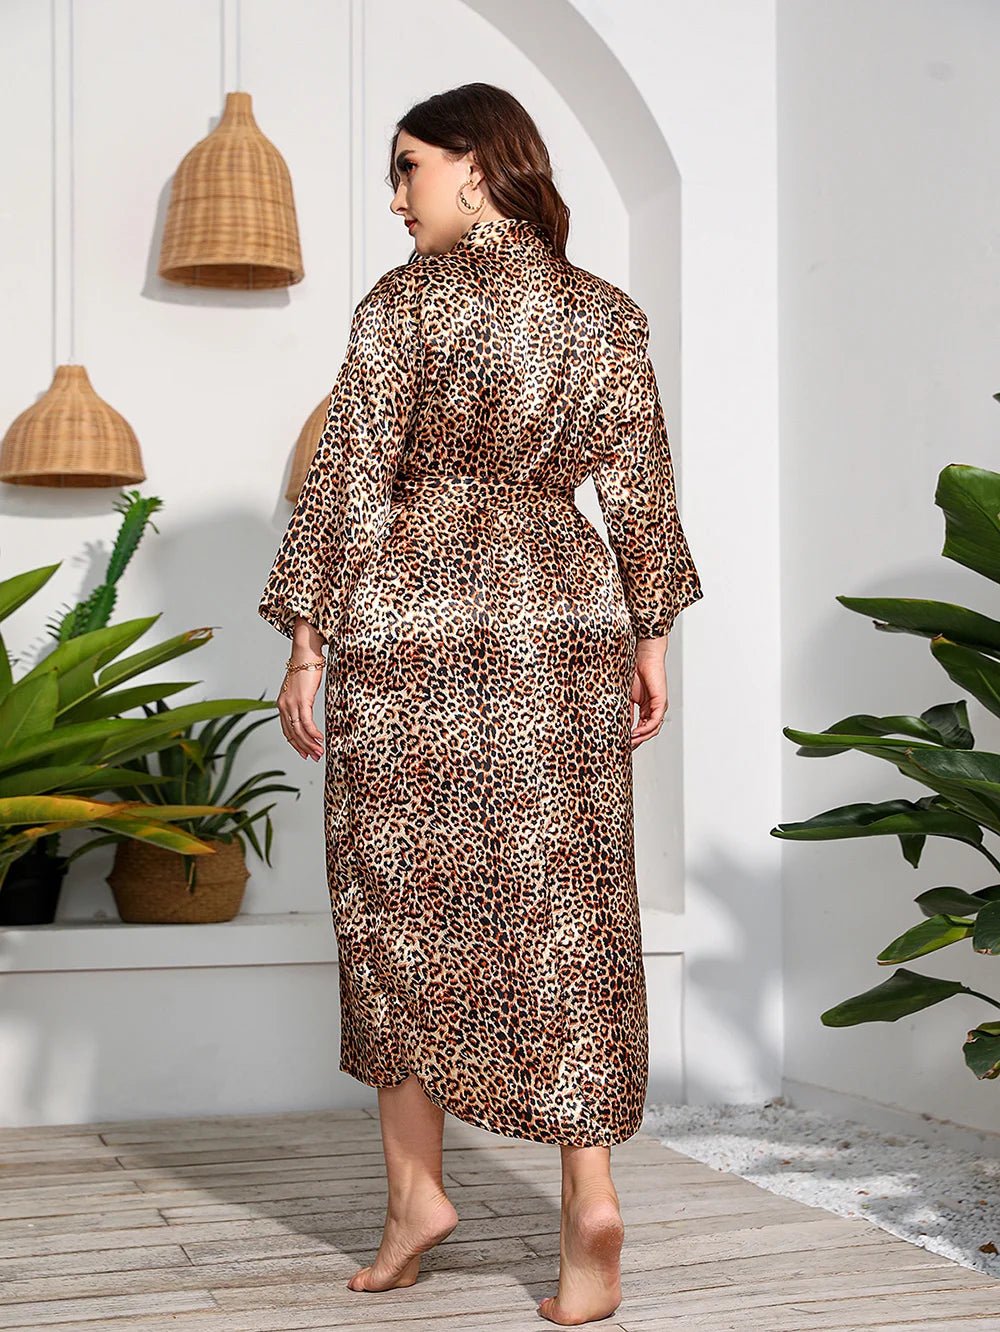 Plus Leopard or Floral Print Satin Kimono Robe - HER Plus Size by Ench